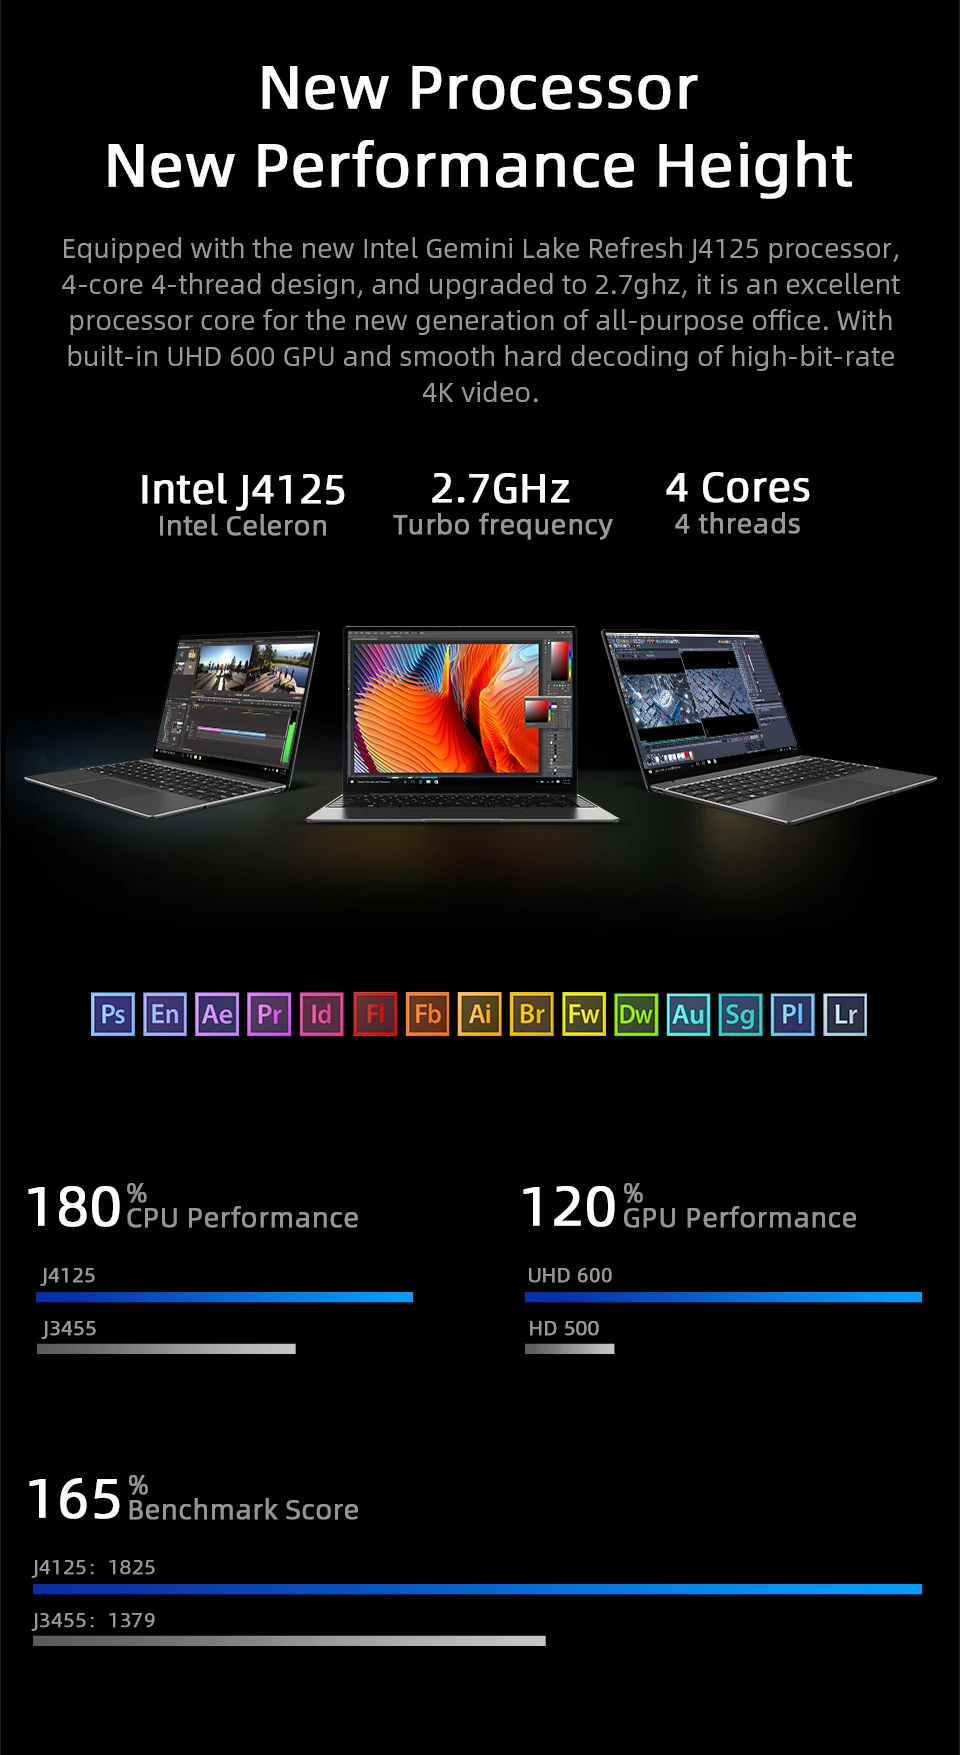 CHUWI GemiBook Pro 14 inch 2K Screen Laptop 8GB RAM 256GB SSD Intel Celeron Quad Core Windows 10 Computer with Backlit Keyboard